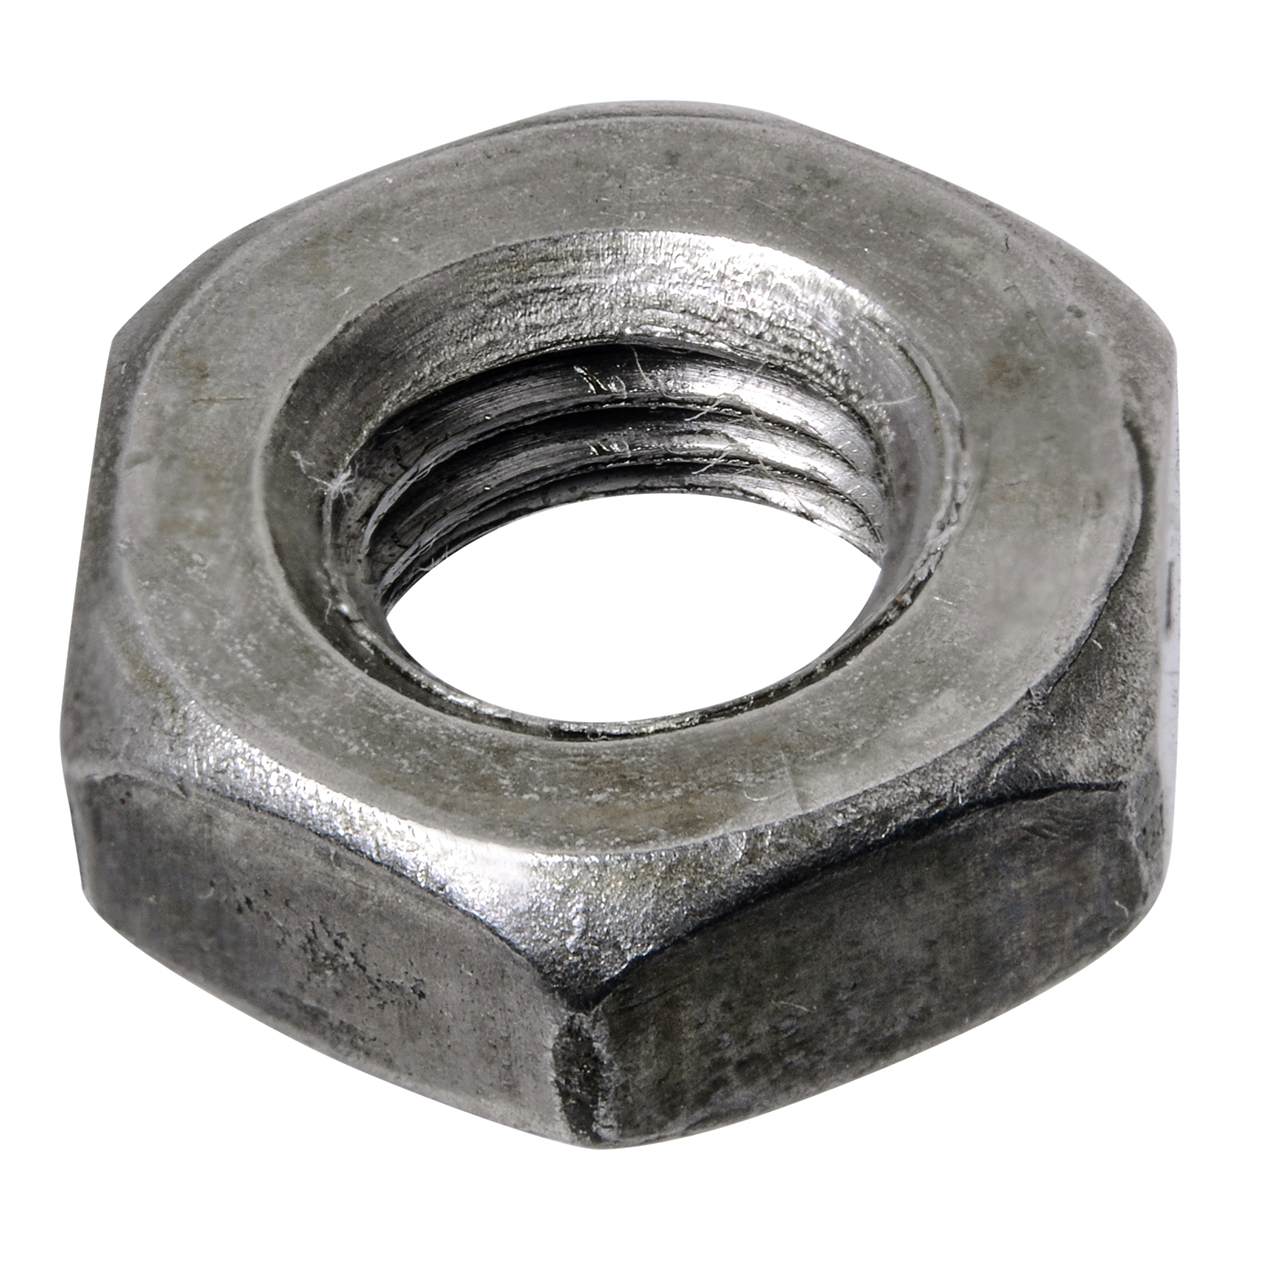 Grade 8 High-Strength Steel Hex Nut 1-1/8-12 Thread Size Zinc Yellow-Chromate Plated 